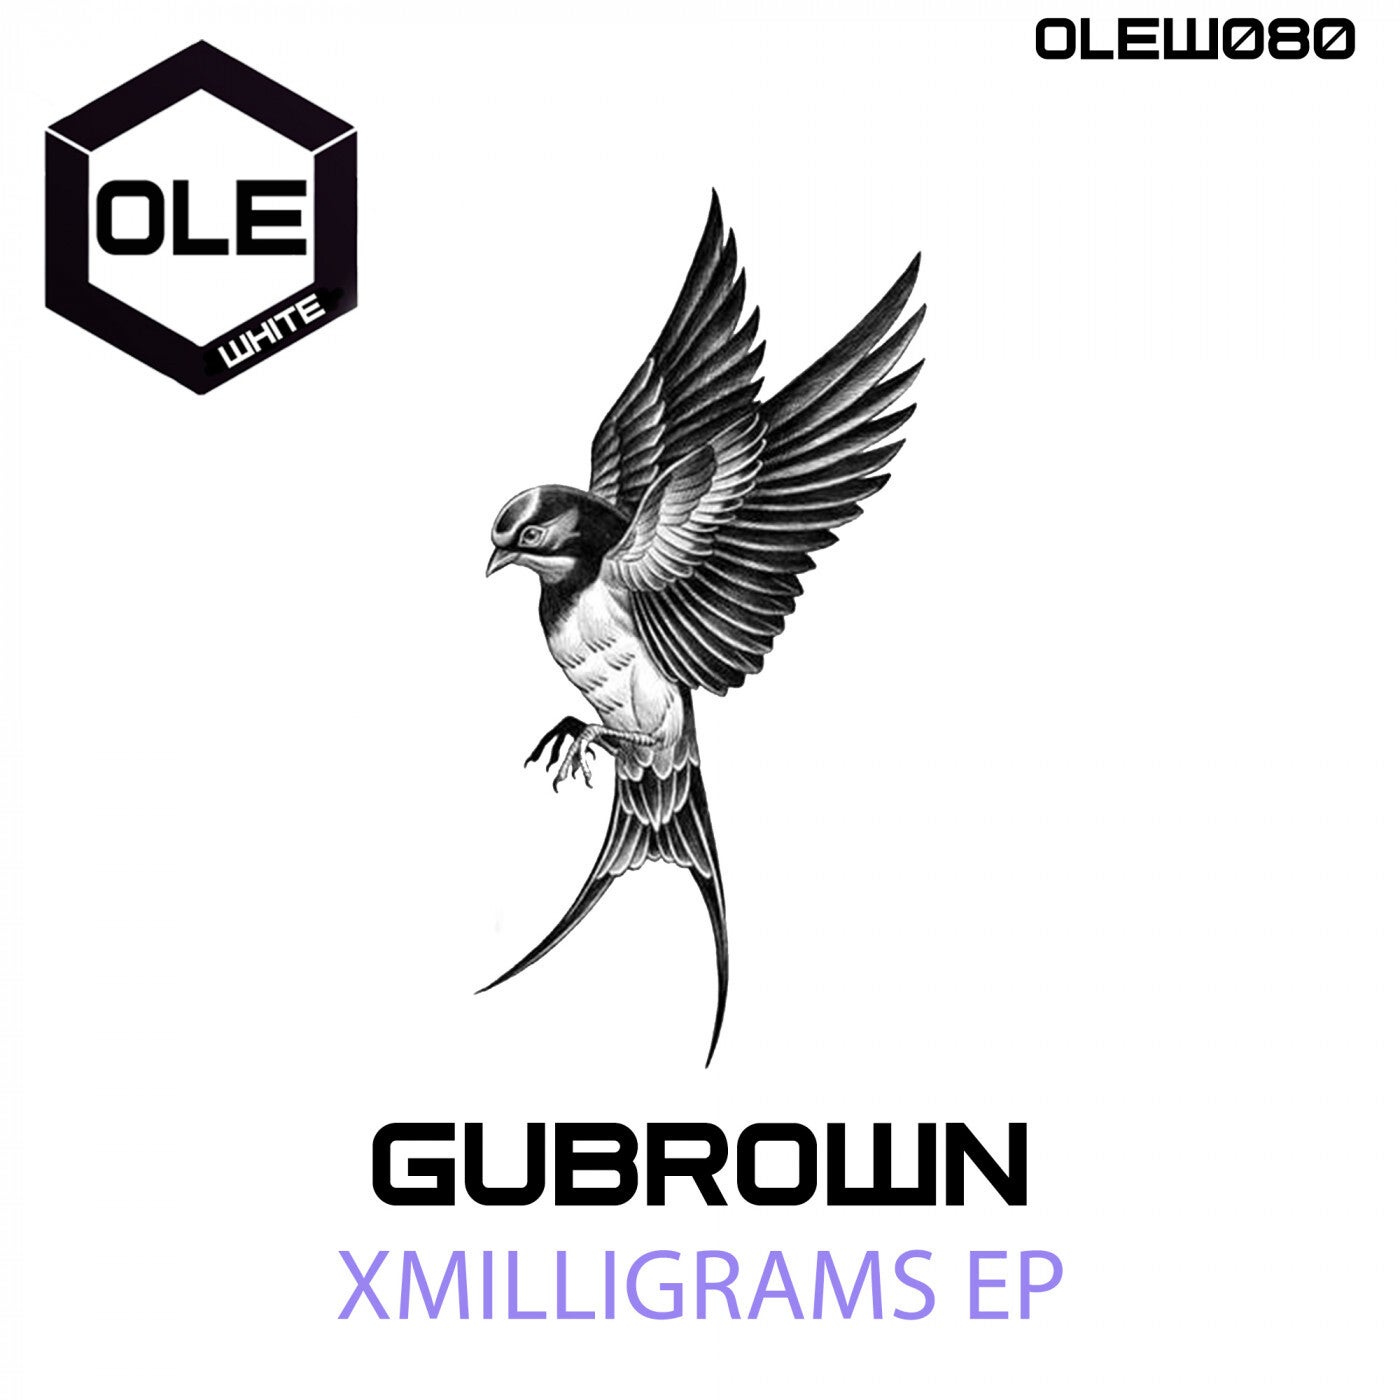 Gubrown – XMILLIGRAMS EP [OLEW080]